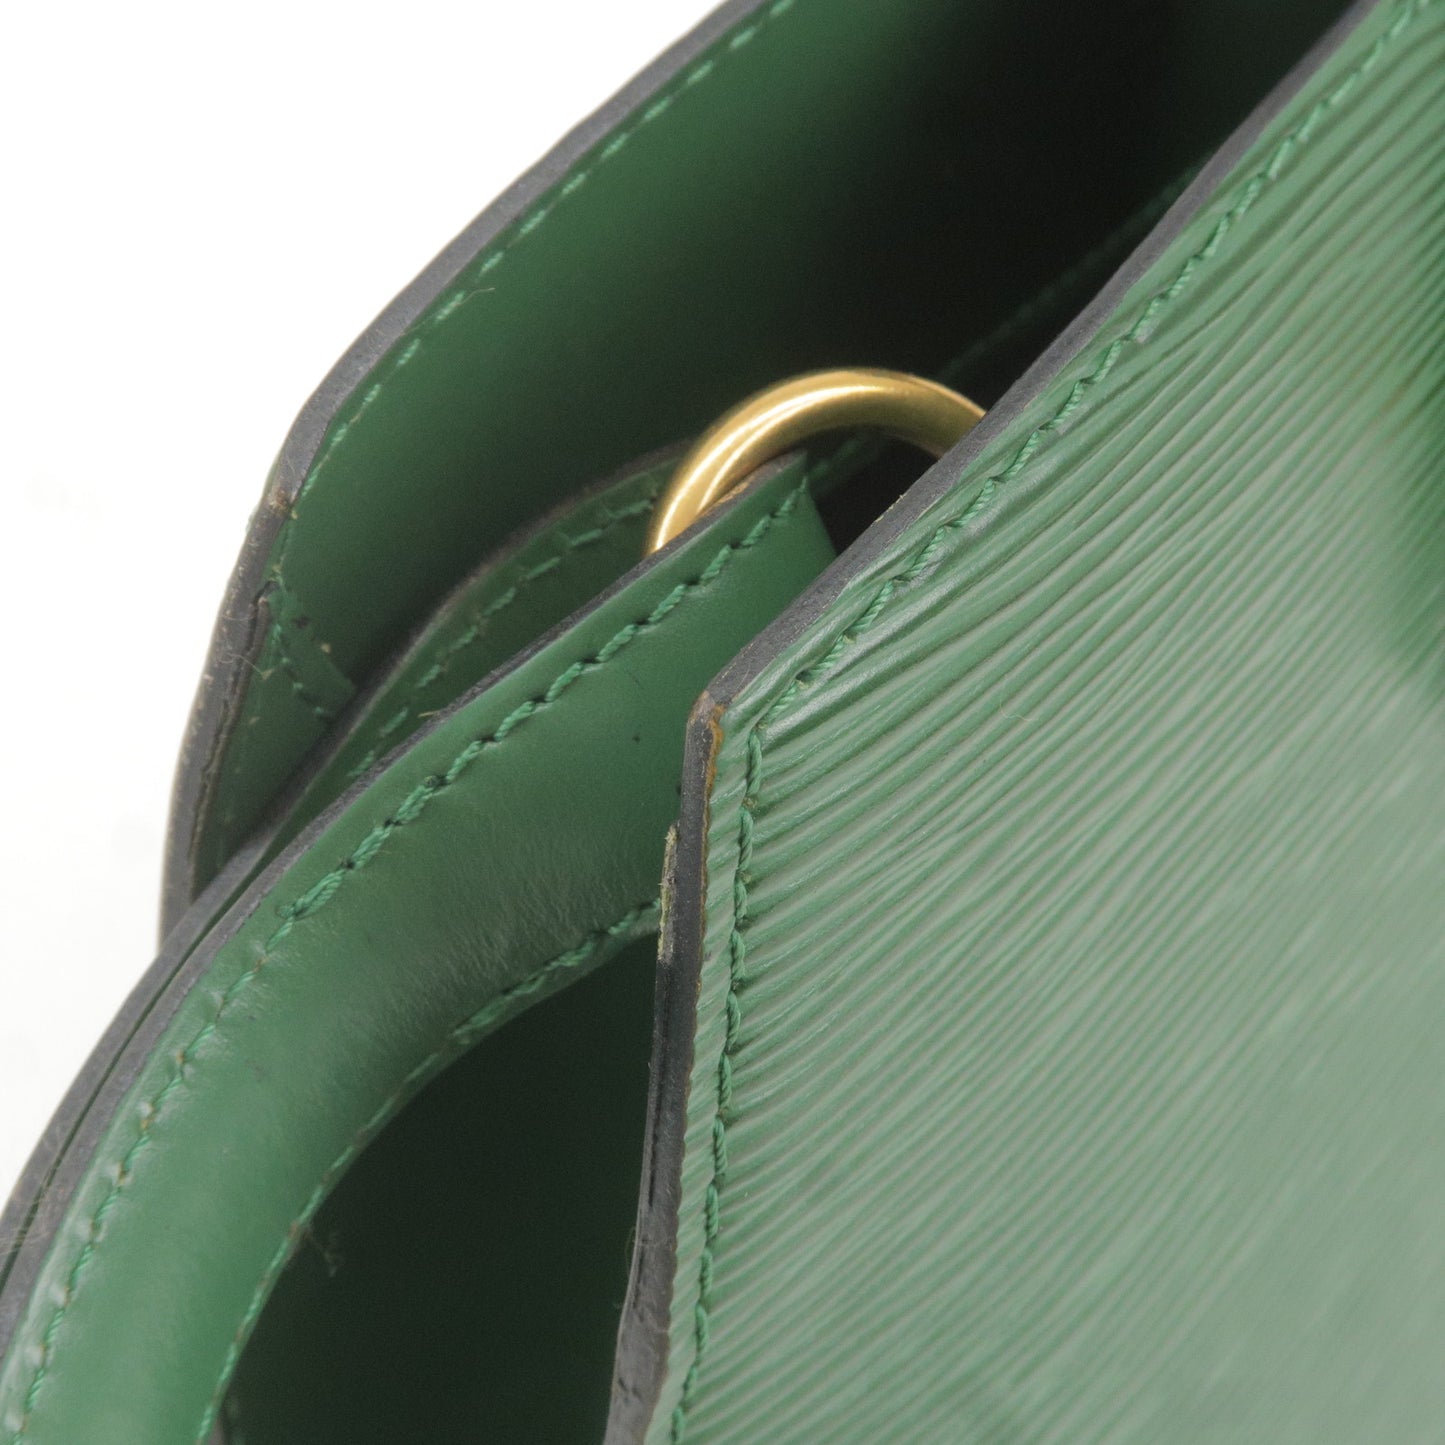 Louis Vuitton Epi Cluny Shoulder Bag Borneo Green M52254